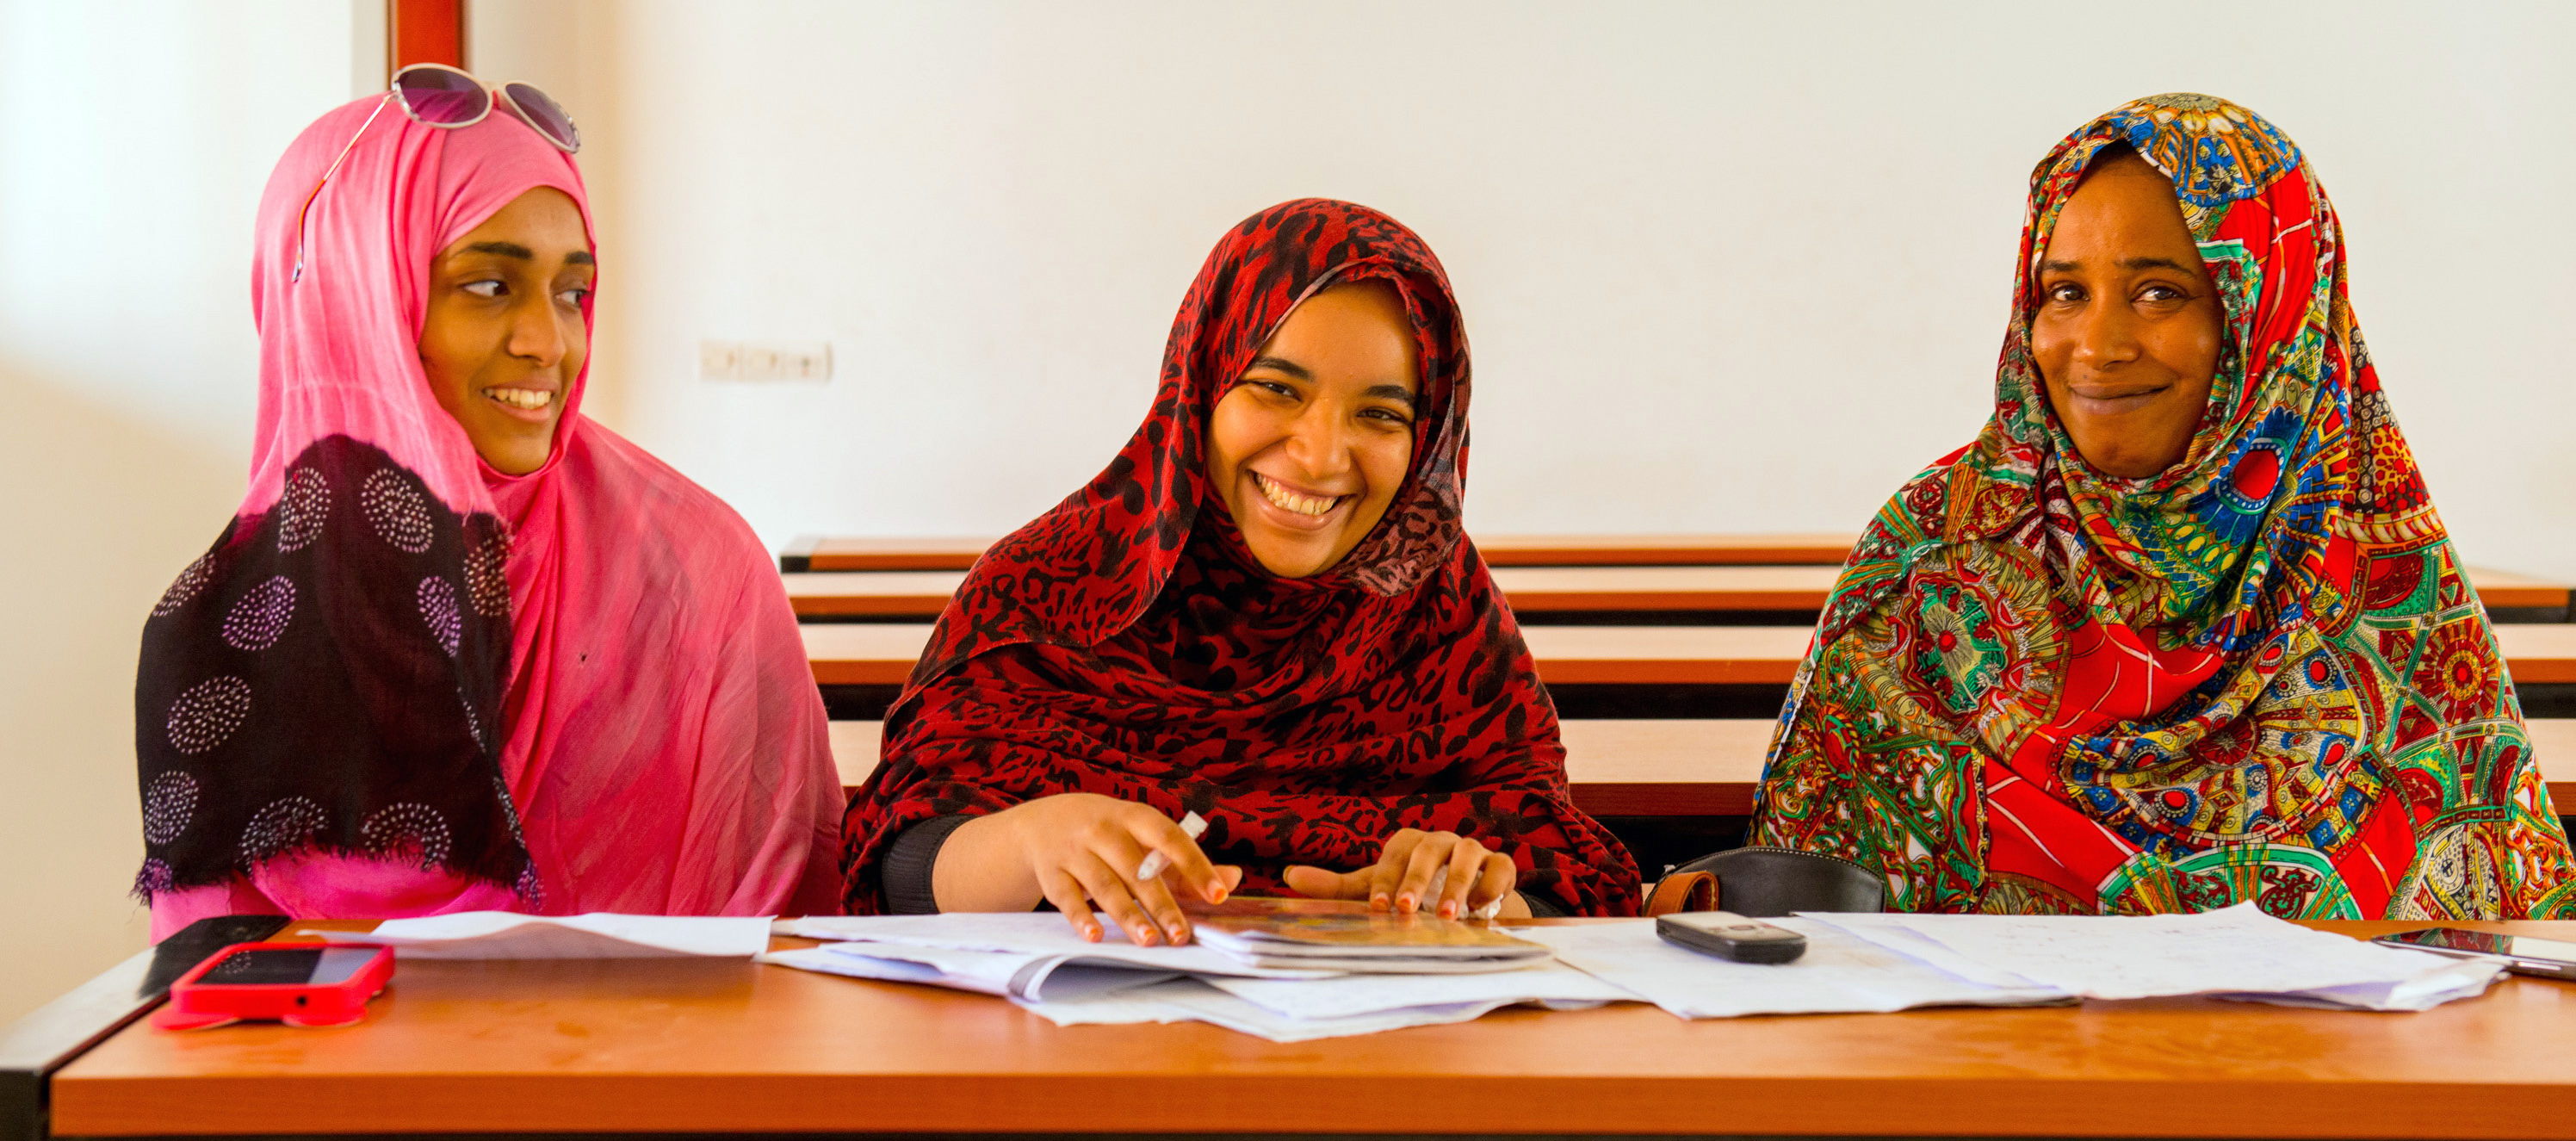 Mauritania women smiling